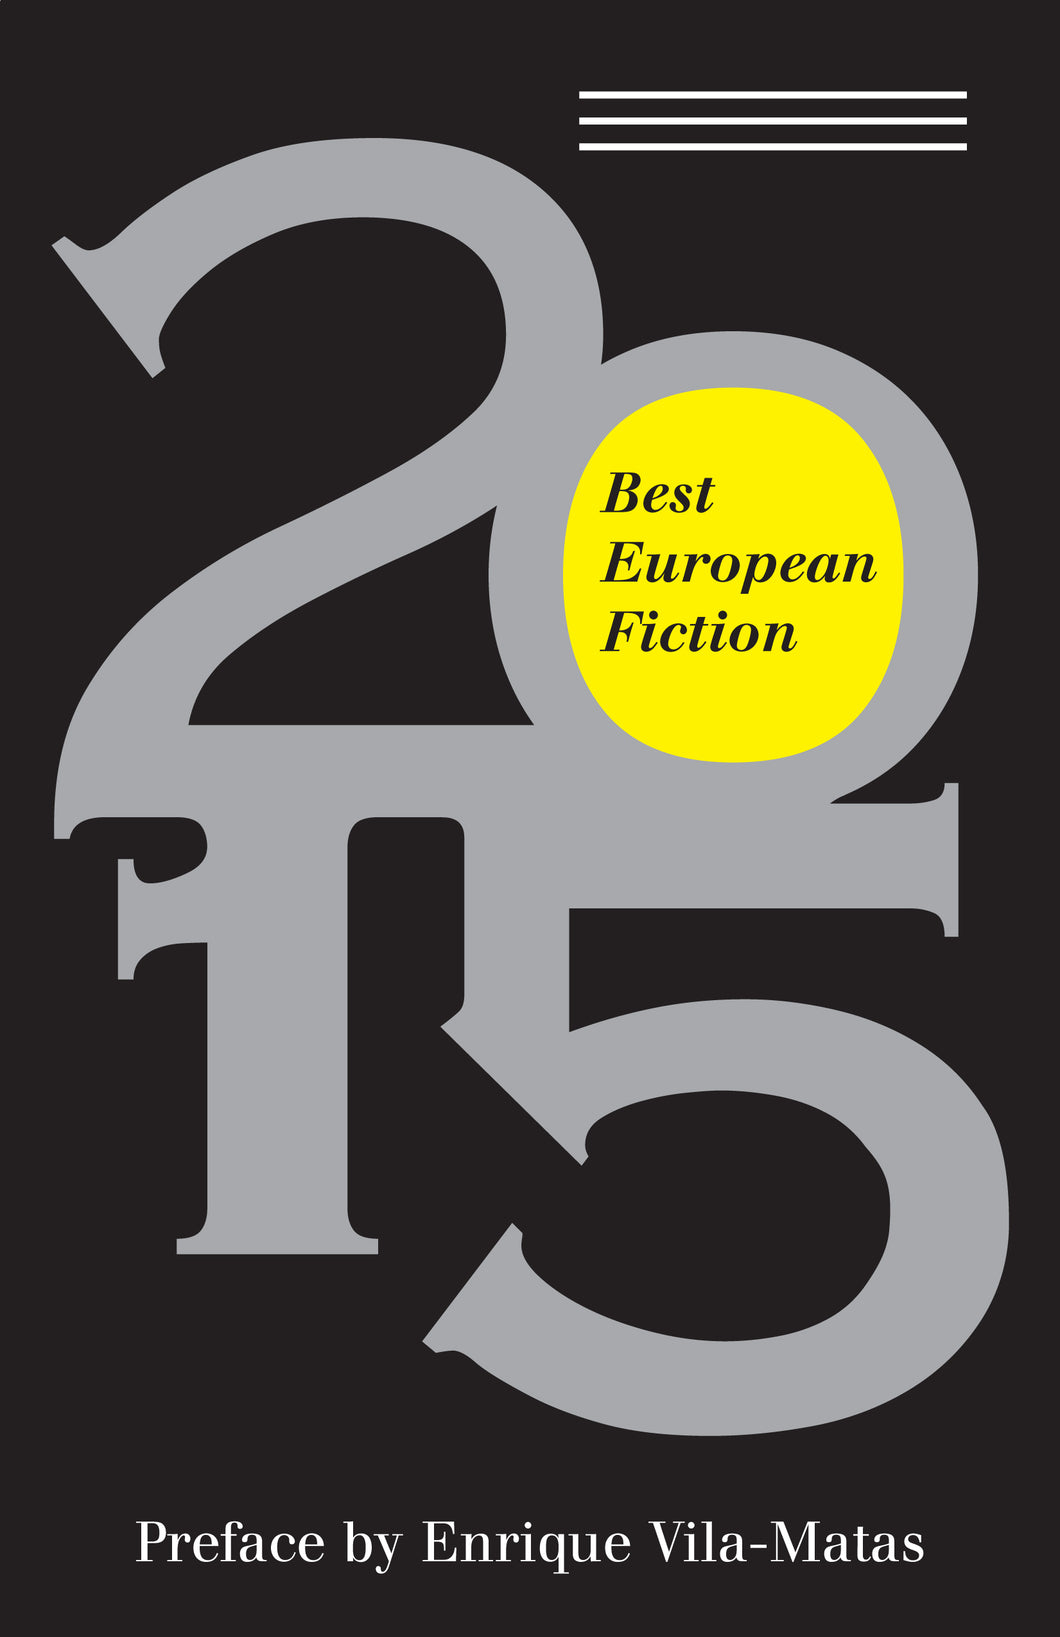 Best European Fiction 2015